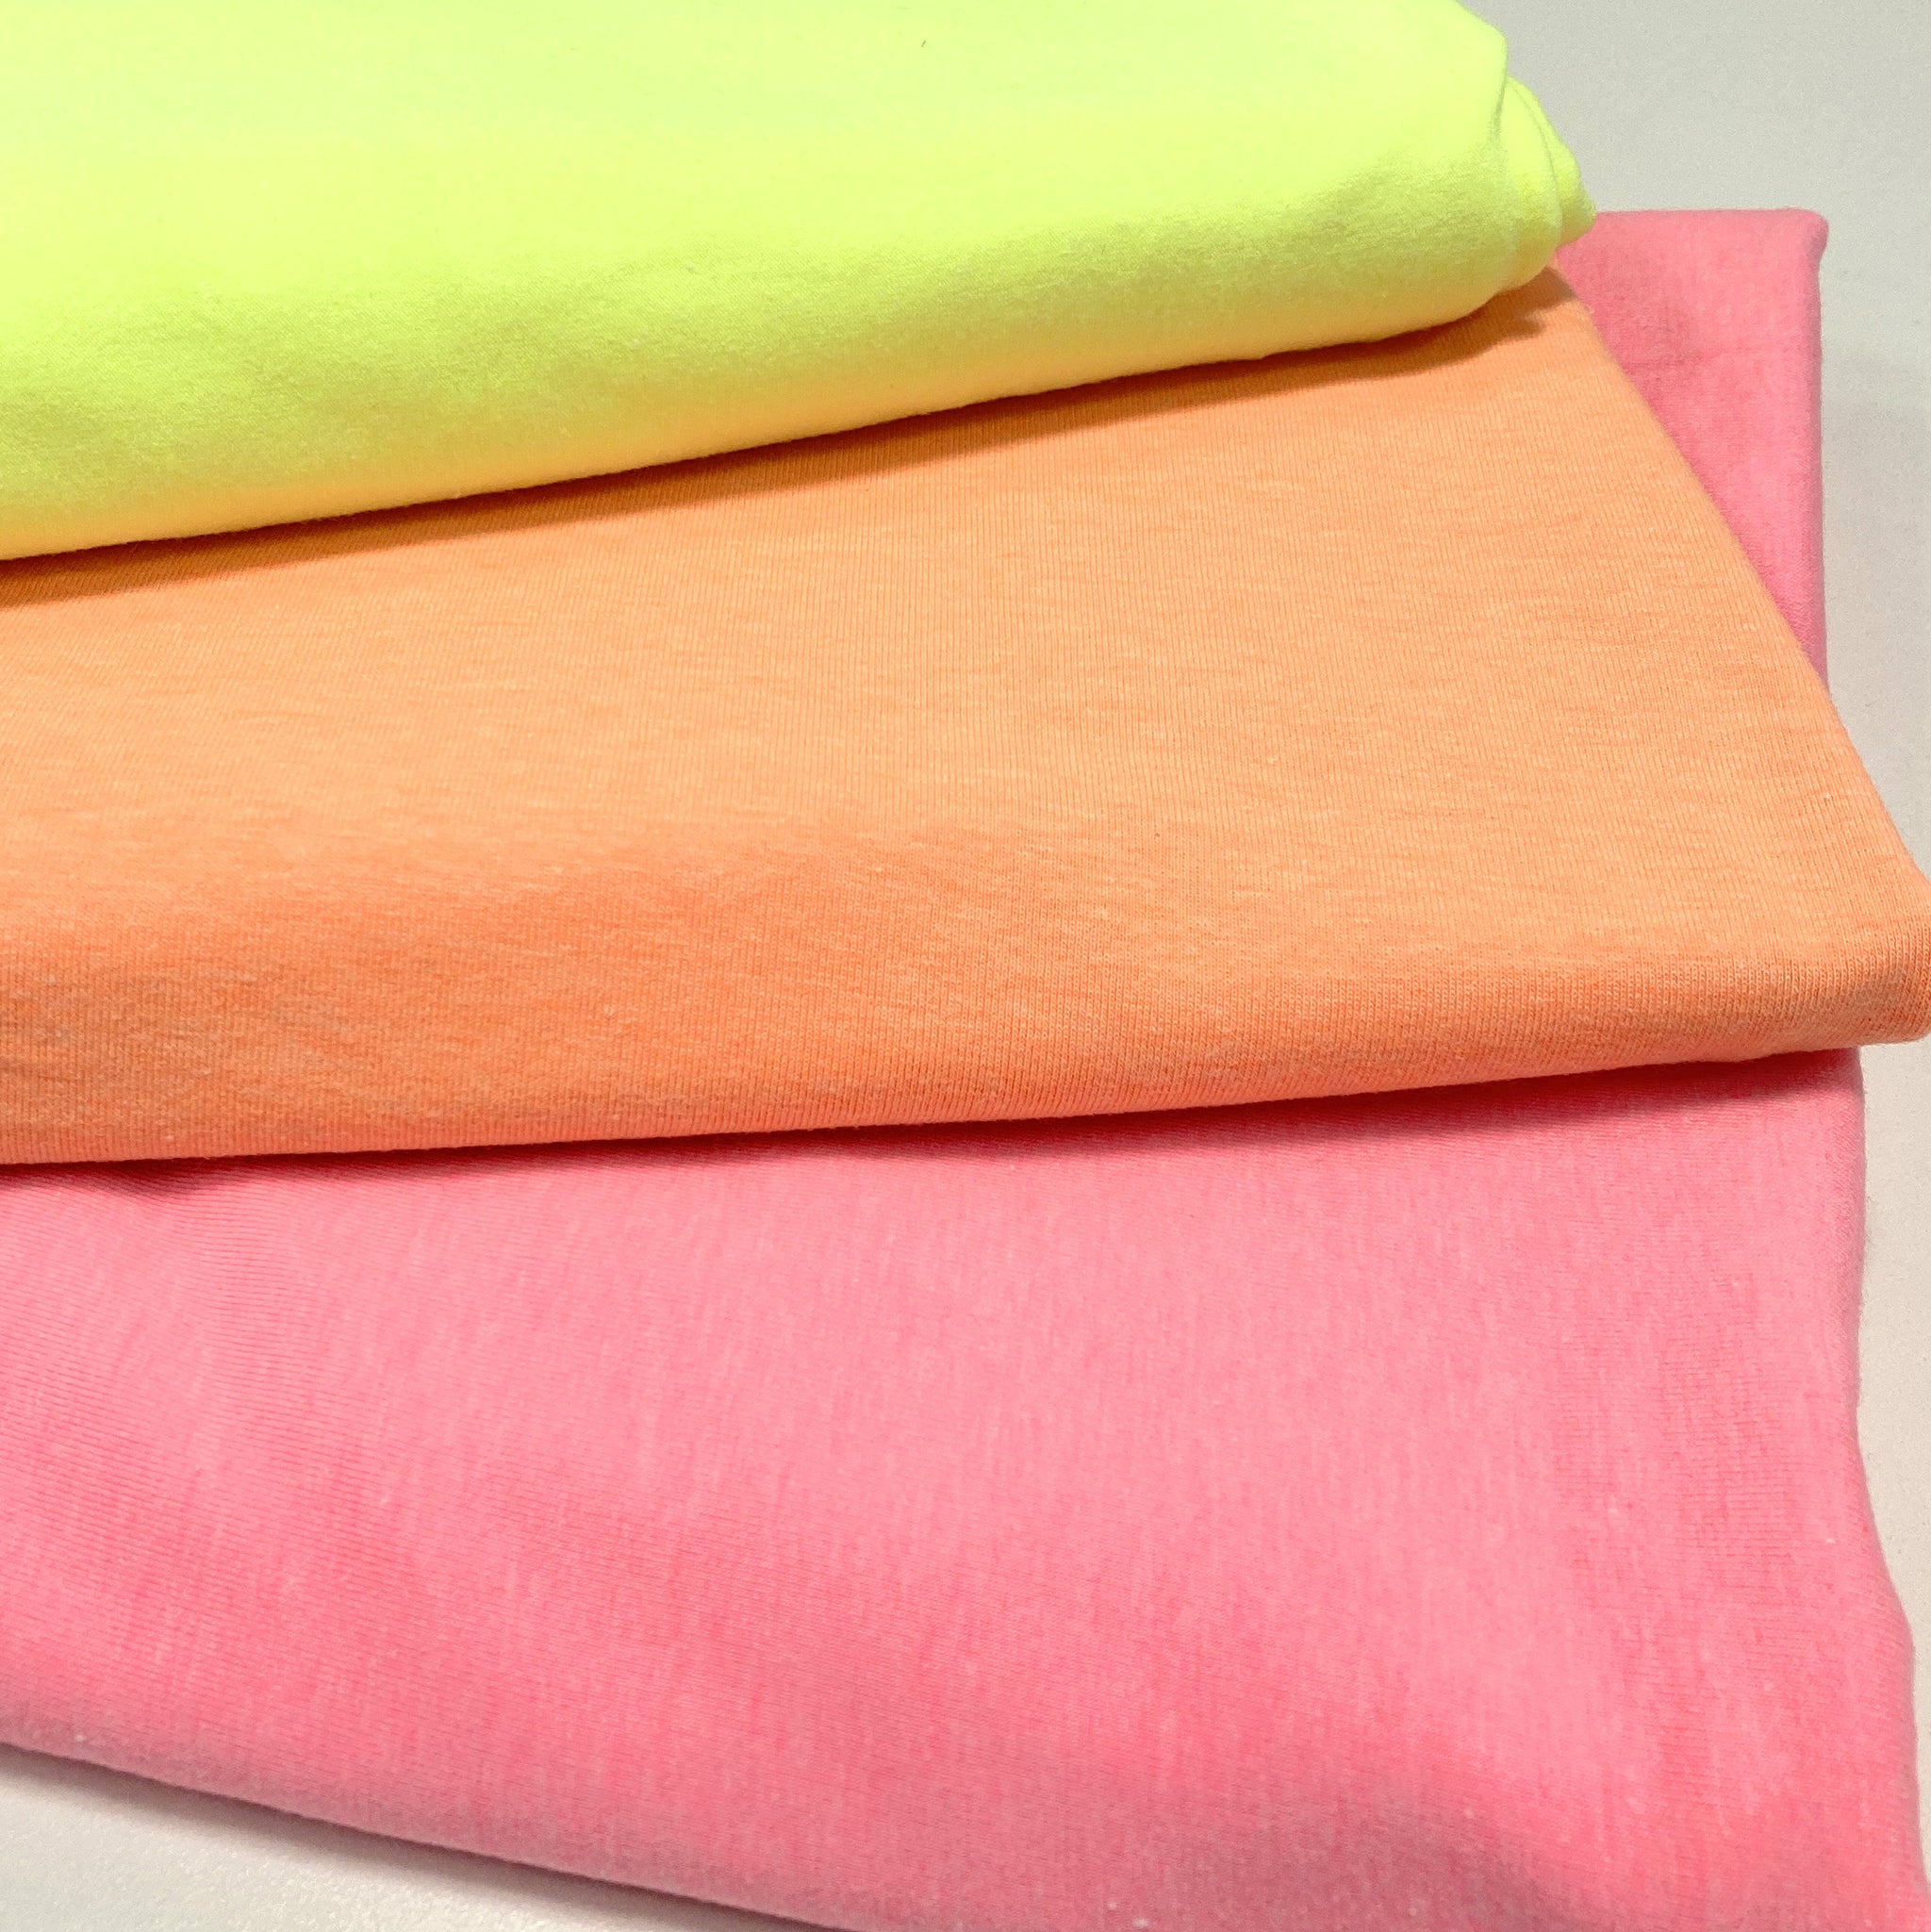 Solid Pink Peach 4 Way Stretch 10 oz Cotton Lycra Jersey Knit Fabric